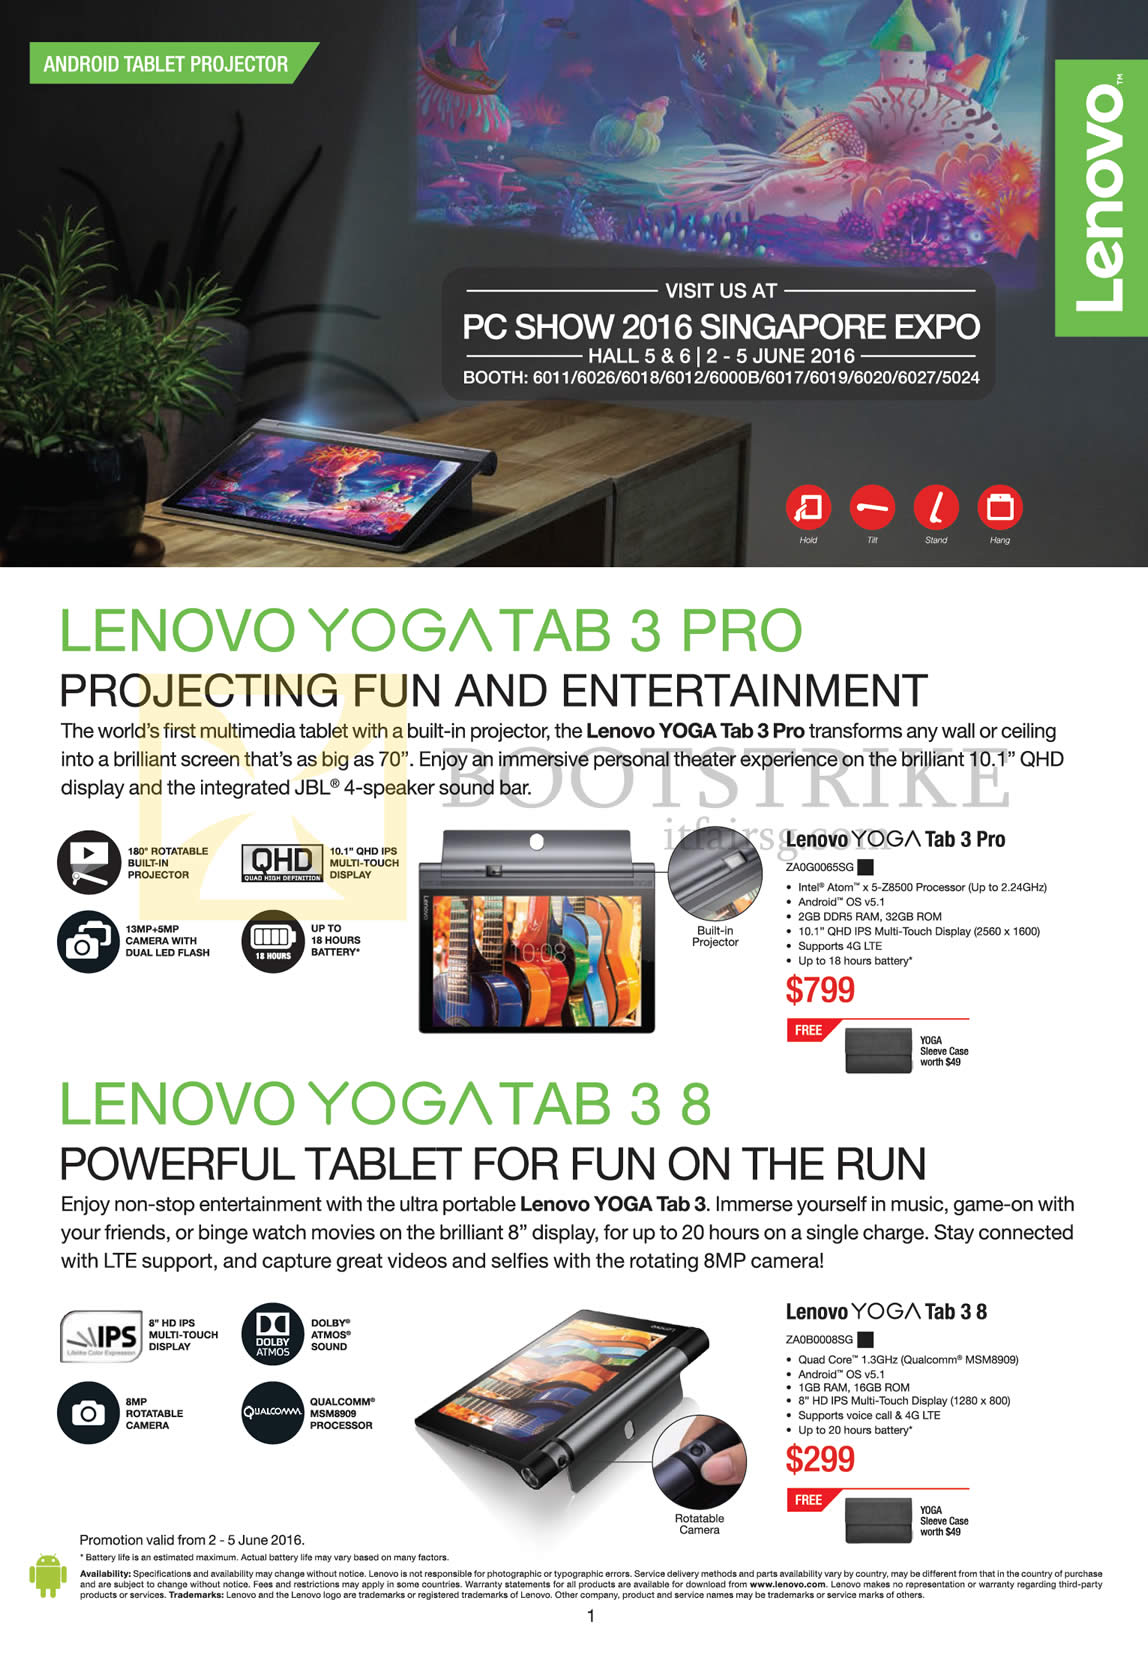 PC SHOW 2016 price list image brochure of Lenovo Tablets Yoga Tab 3 Pro, Yoga Tab 3 8